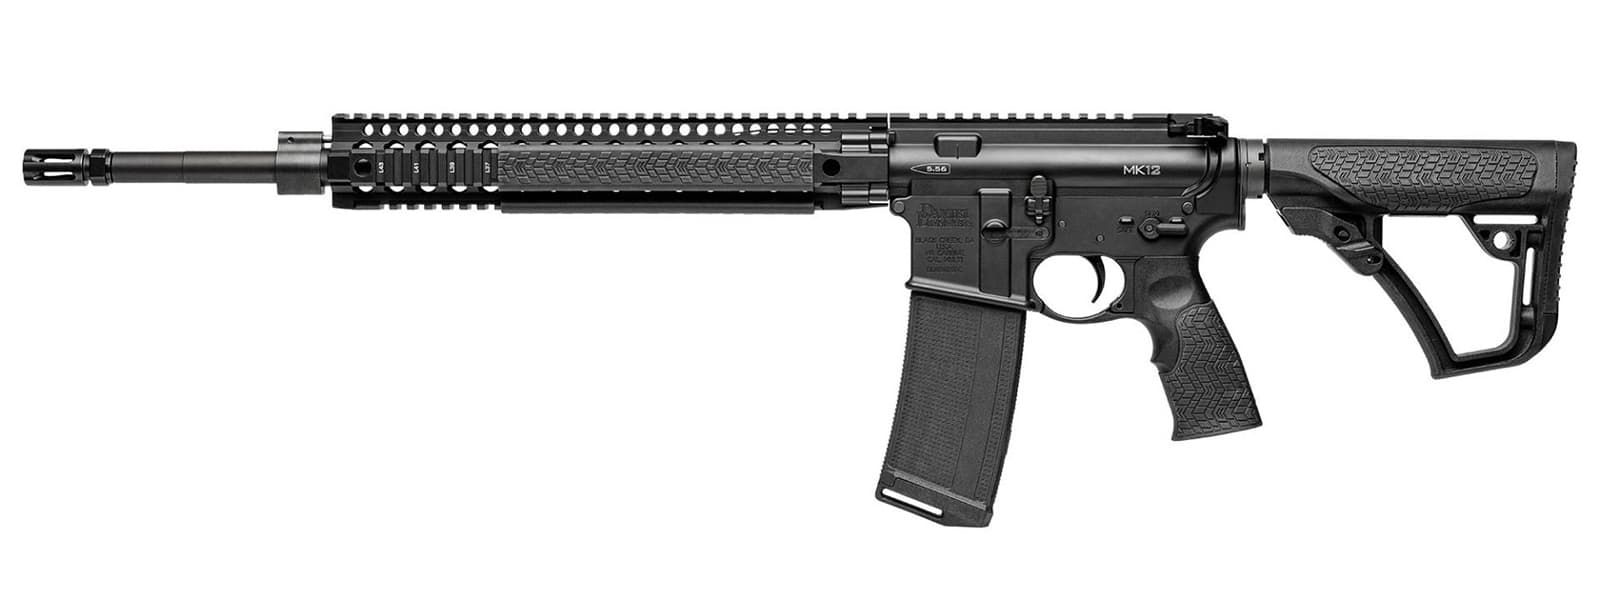 Daniel Defense DDM4 MK12 5.56mm Rifle, Black (02-142-13175-047)